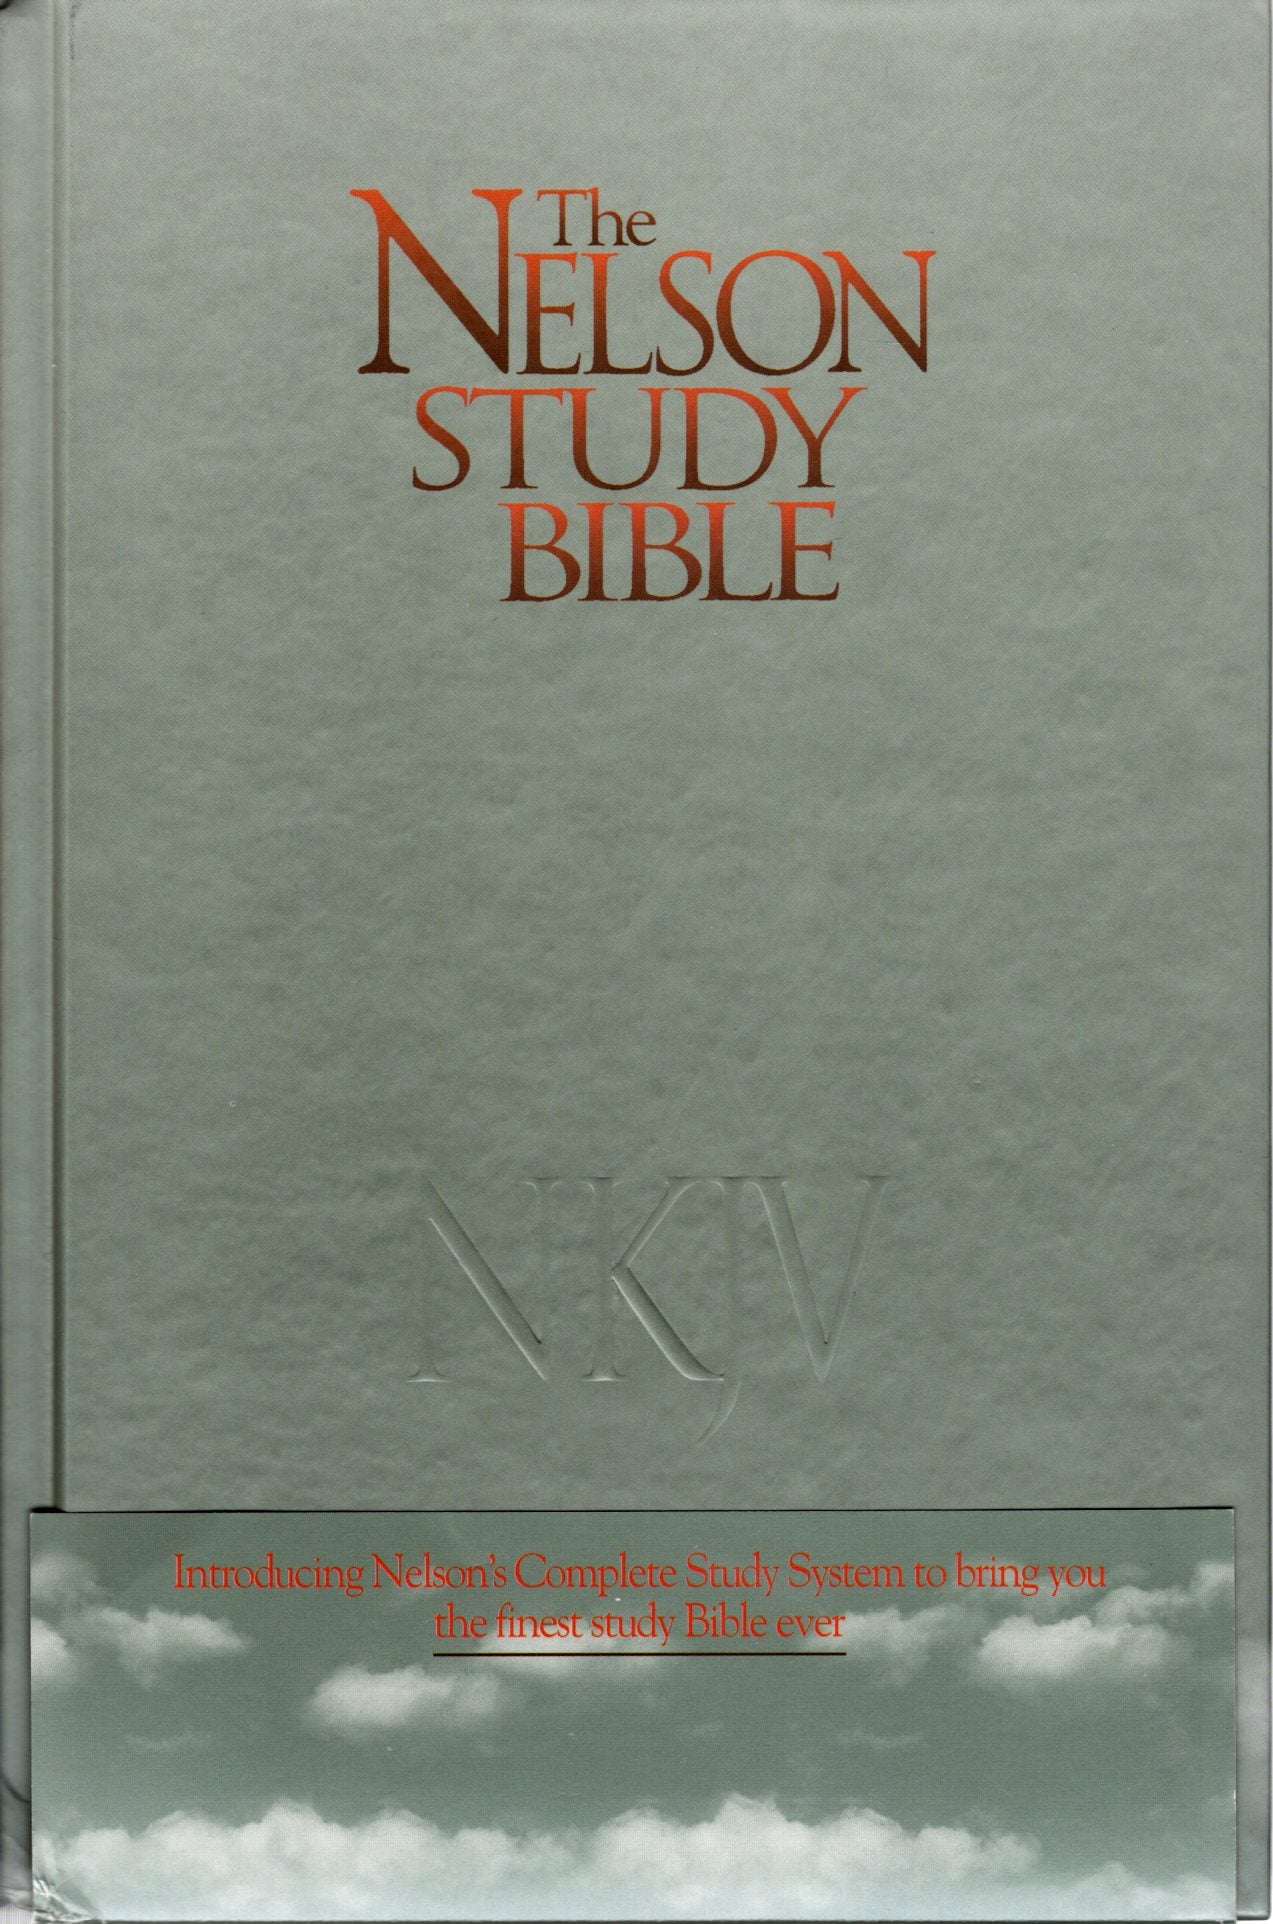 Thomas Nelson NKJV® The Nelson Study Bible - Hardcover